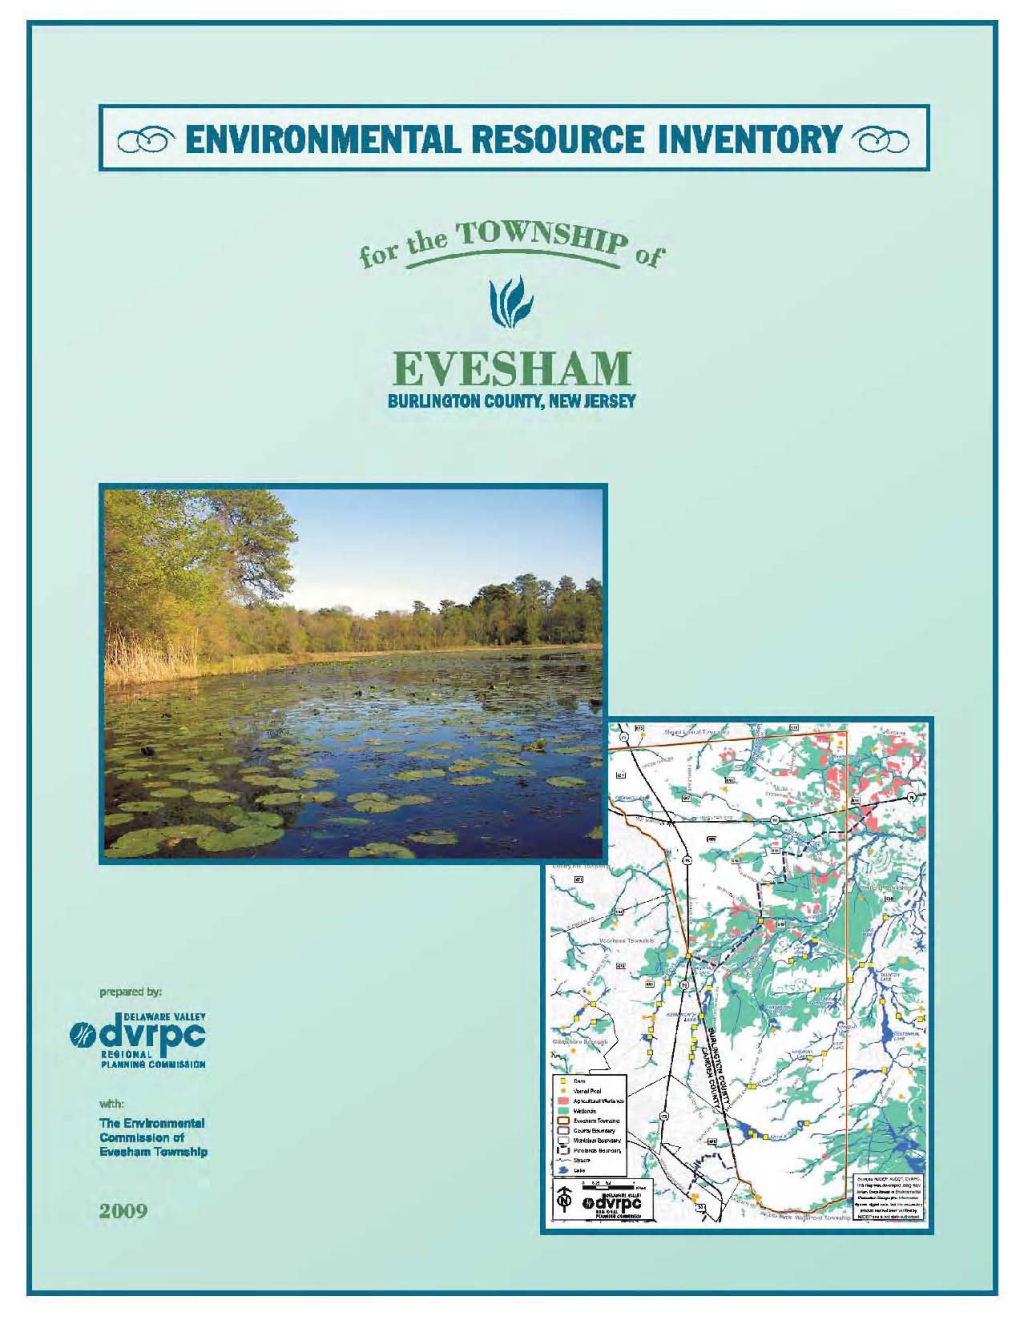 Evesham Environmental Resource Inventory